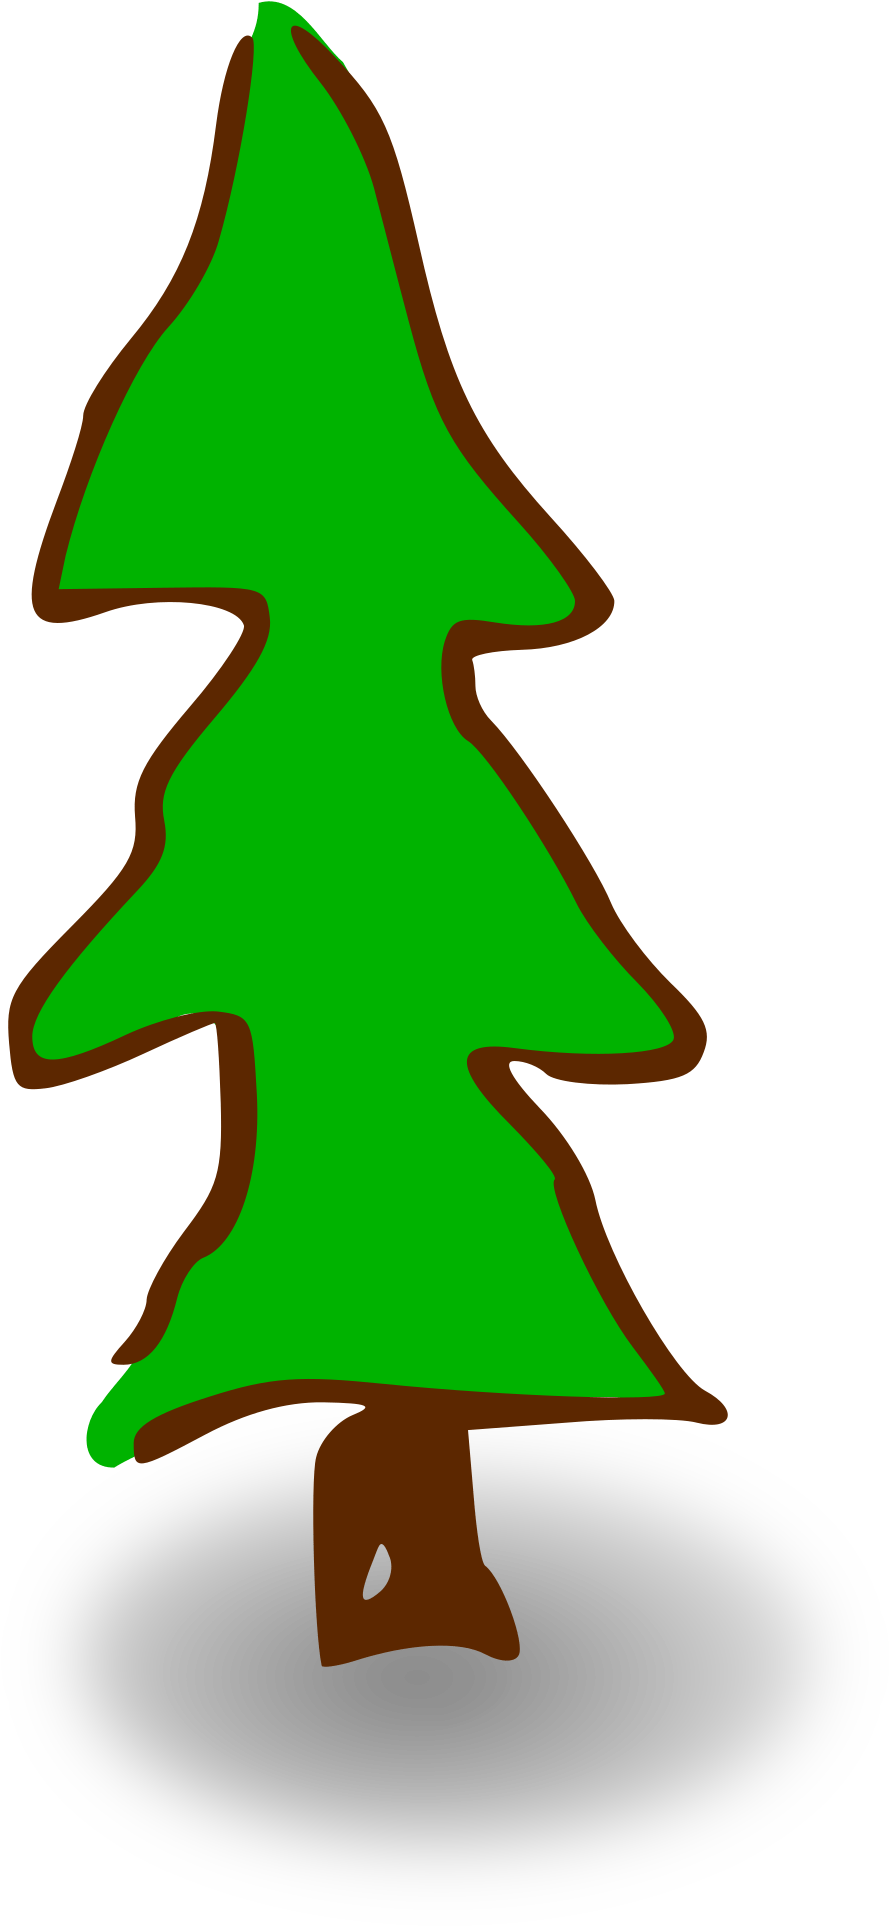 Nicubunu Rpg Map Symbols Tree 6 - Pine (2400x2400)